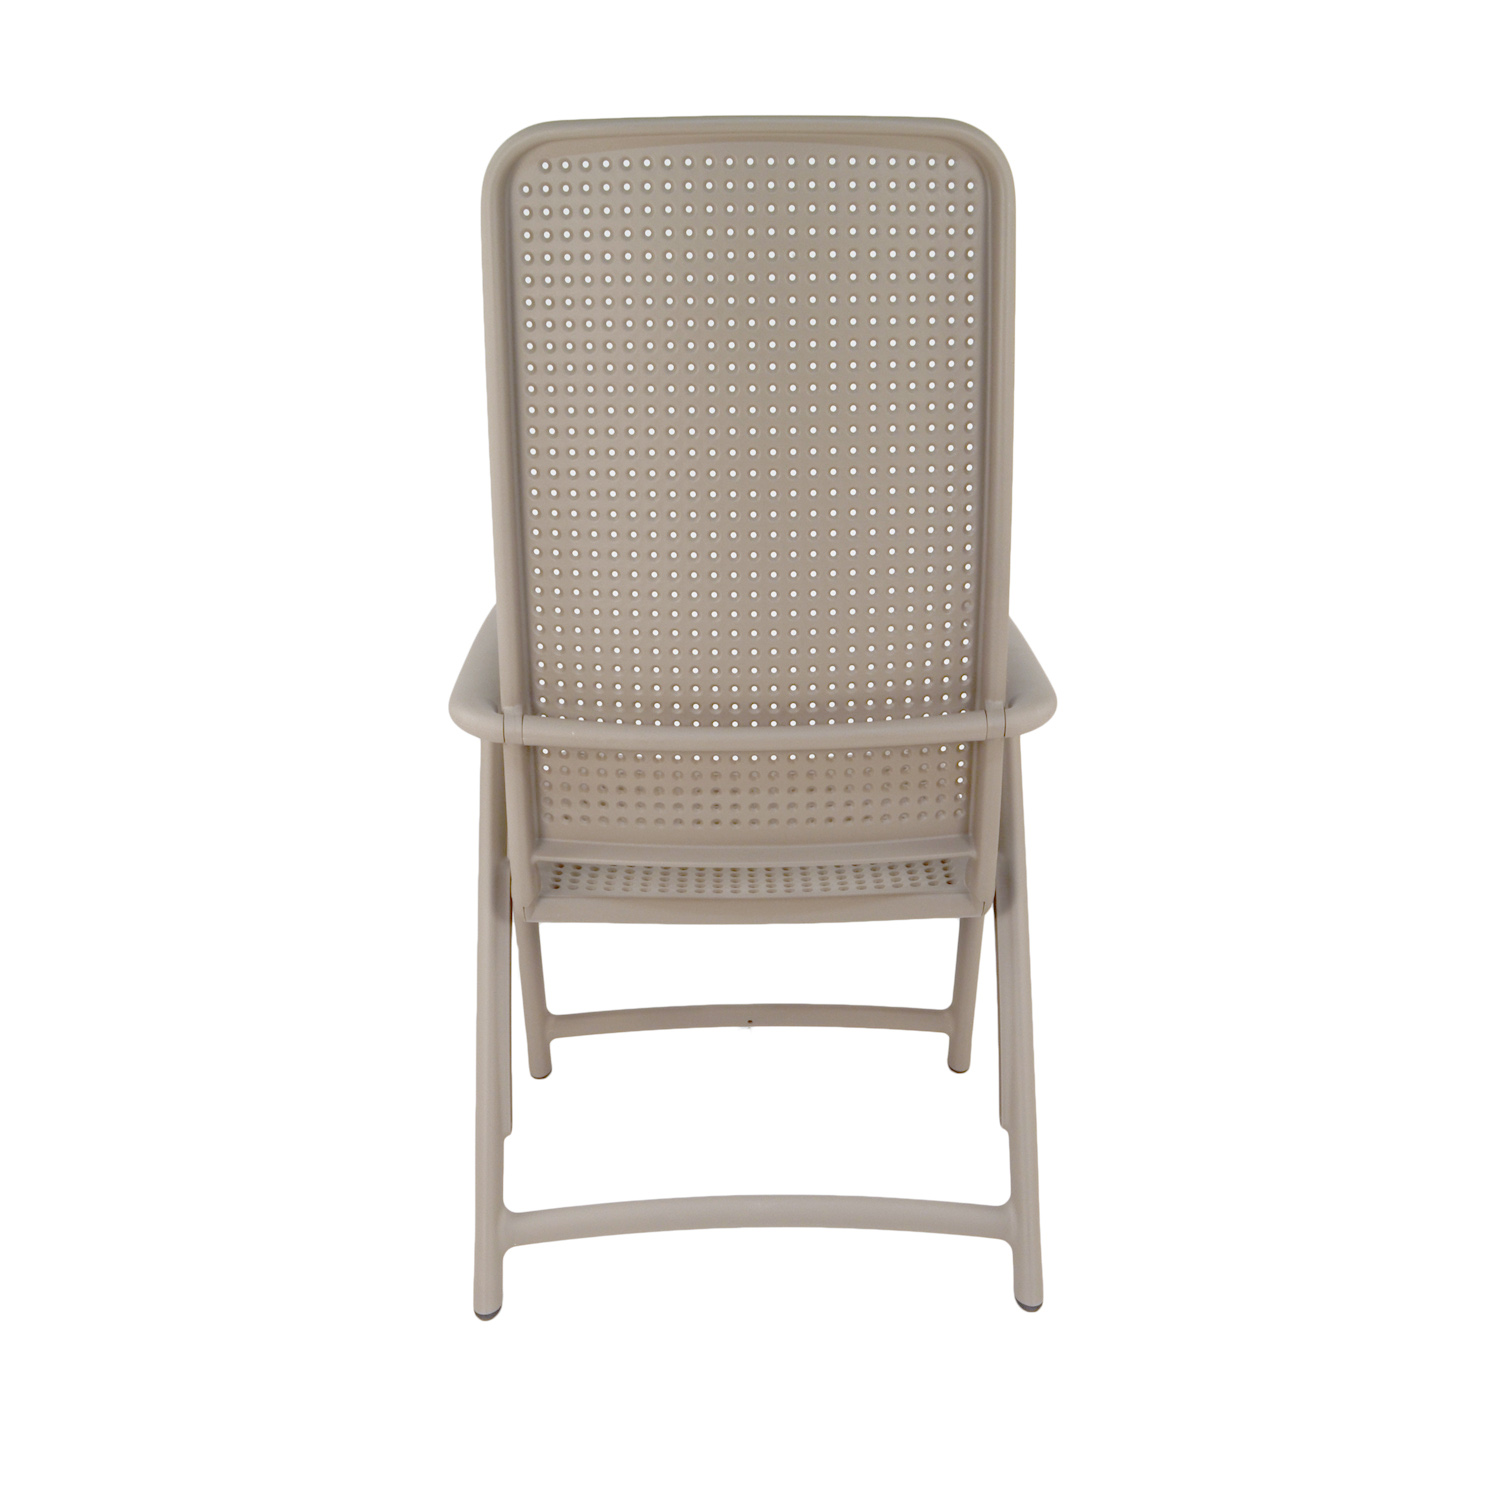 Nardi Darsena Recliner Chair in Turtle Dove Grey Chairs Nardi   